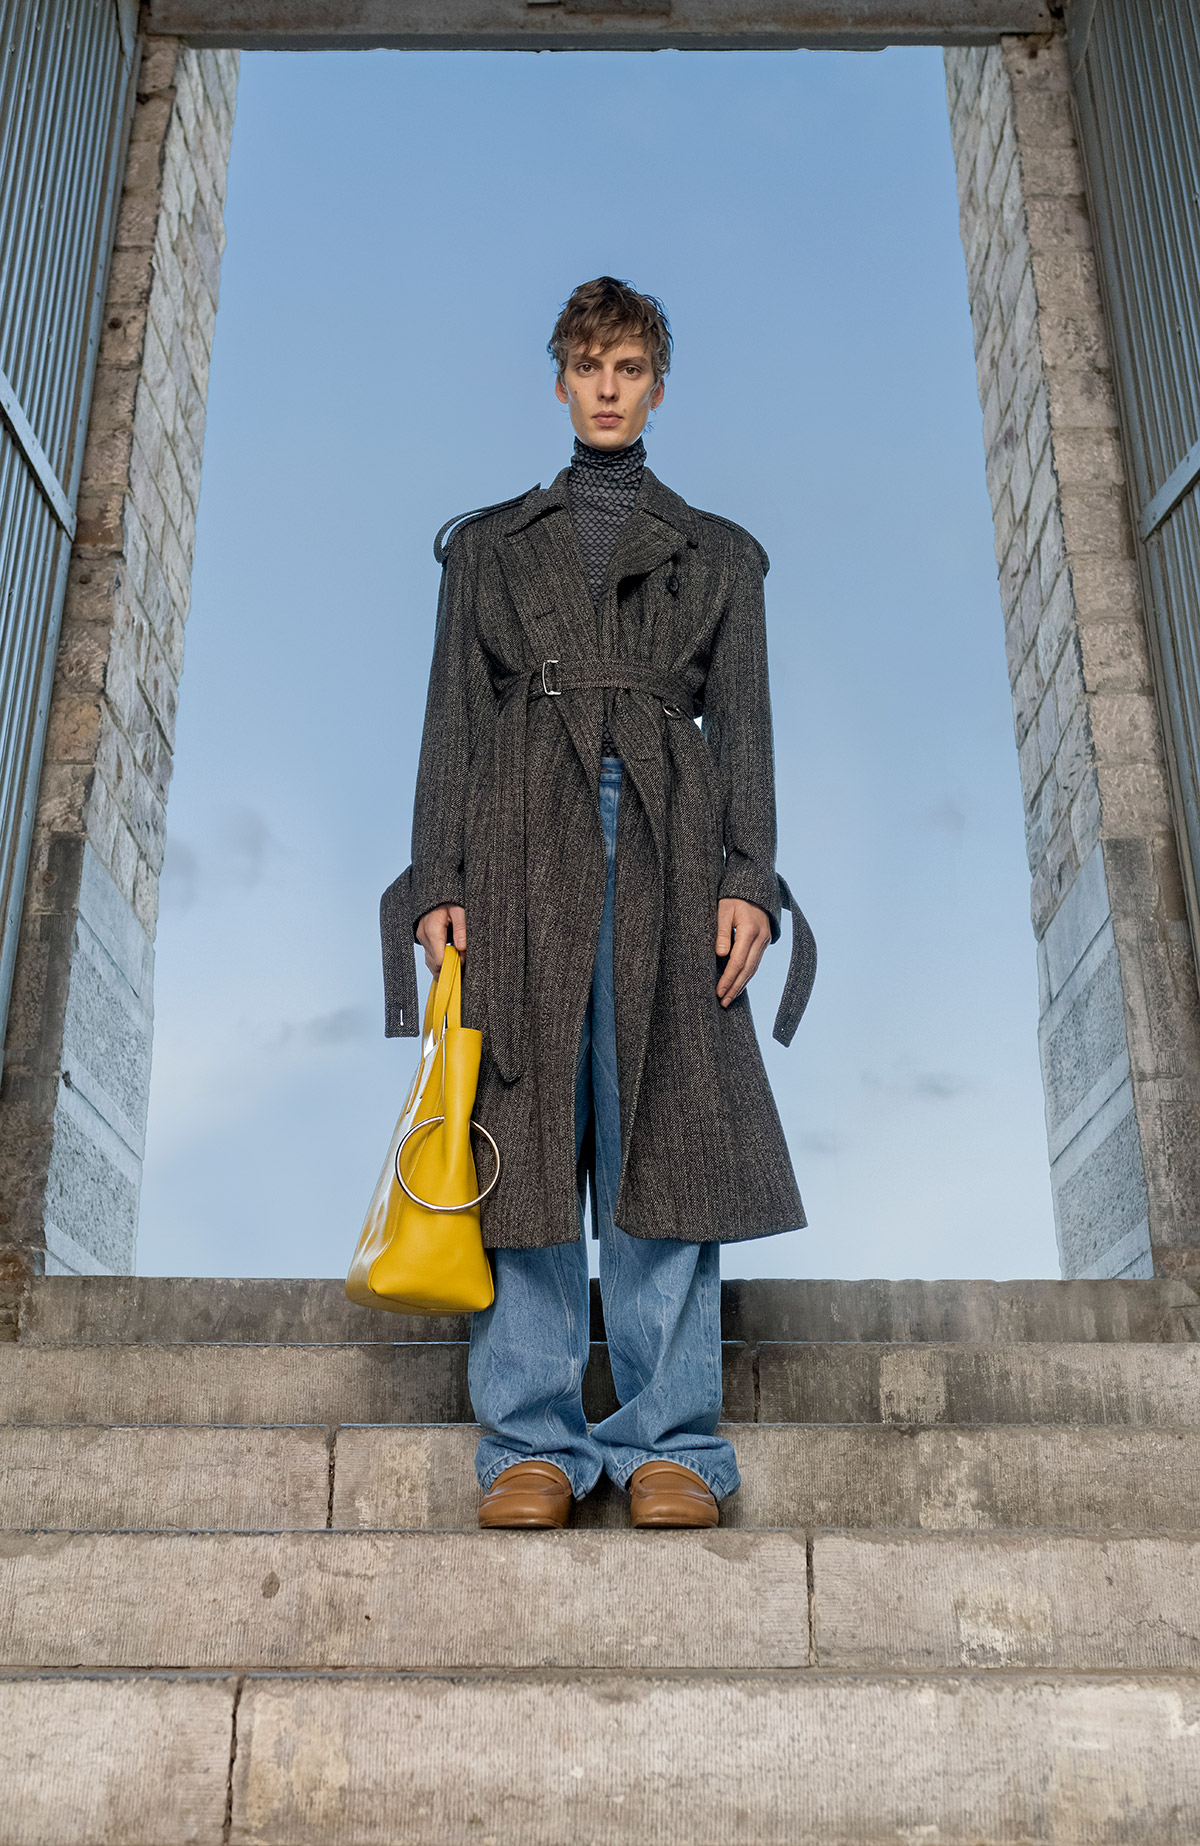 Dries Van Noten Men Autumn/Winter 2021 | The Fashionography